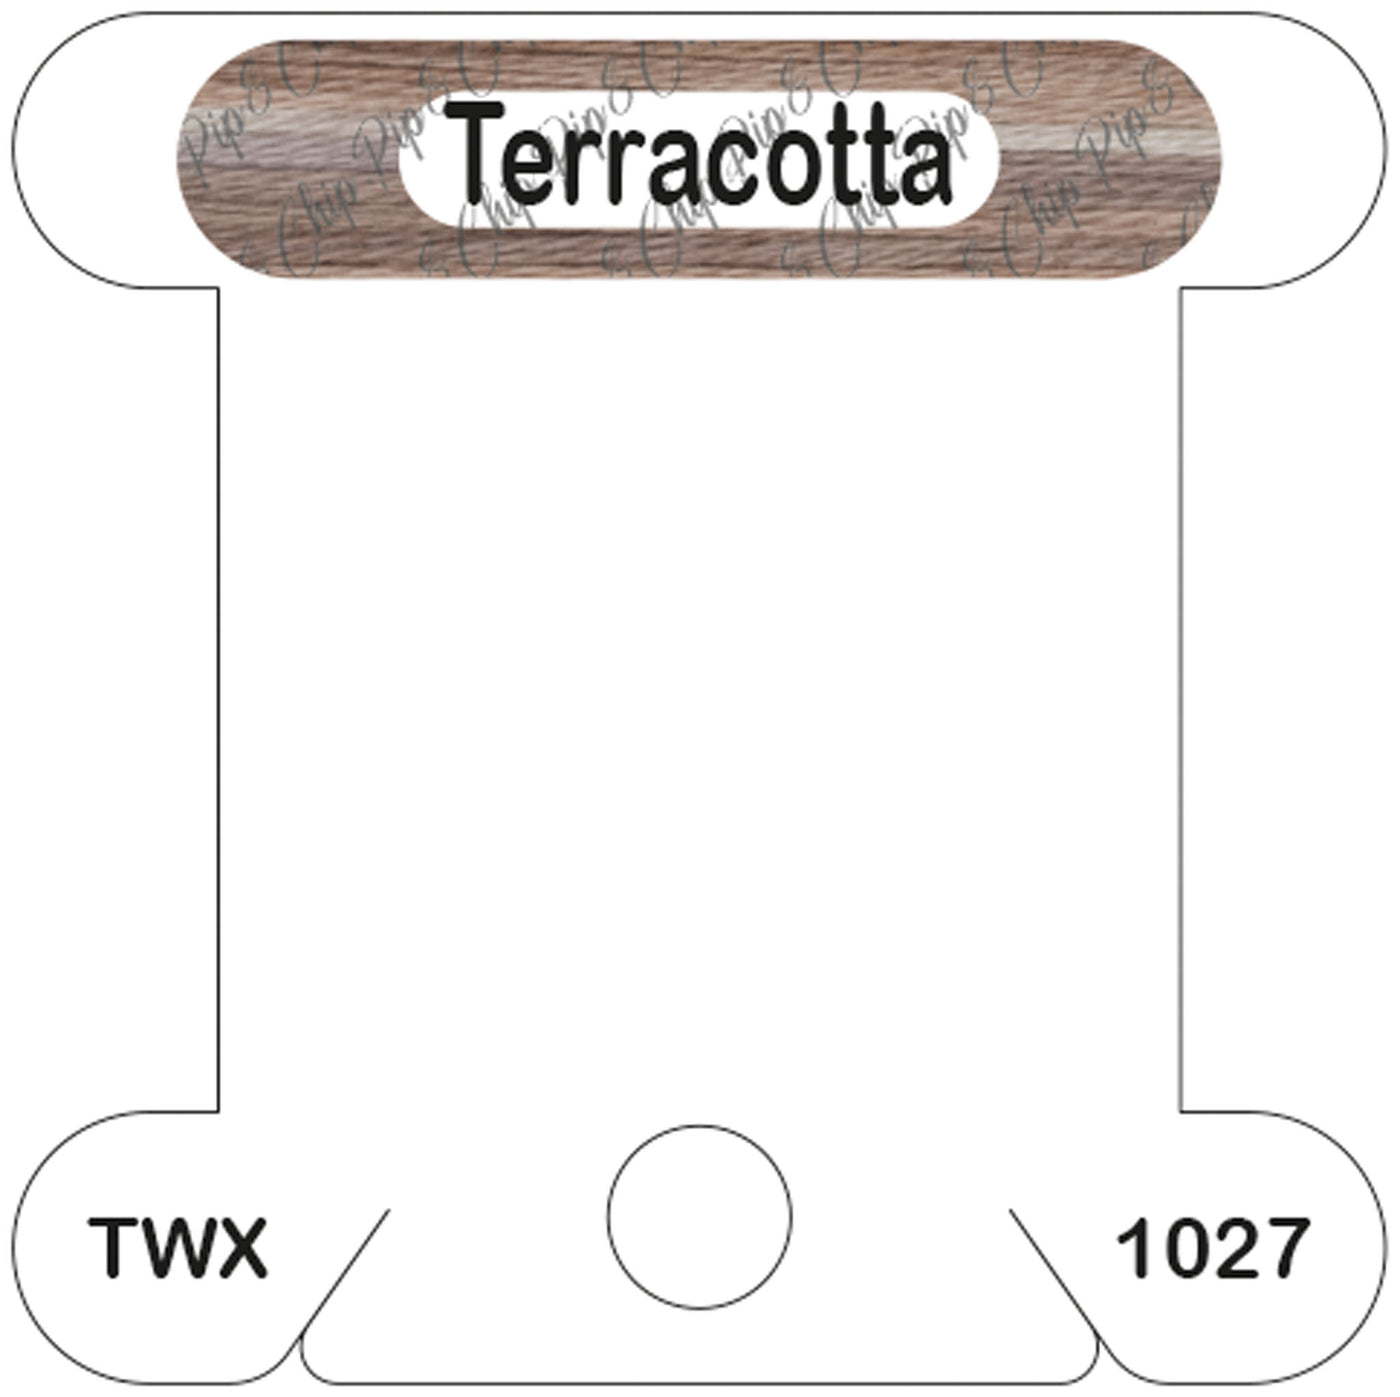 ThreadworX Terracotta acrylic bobbin